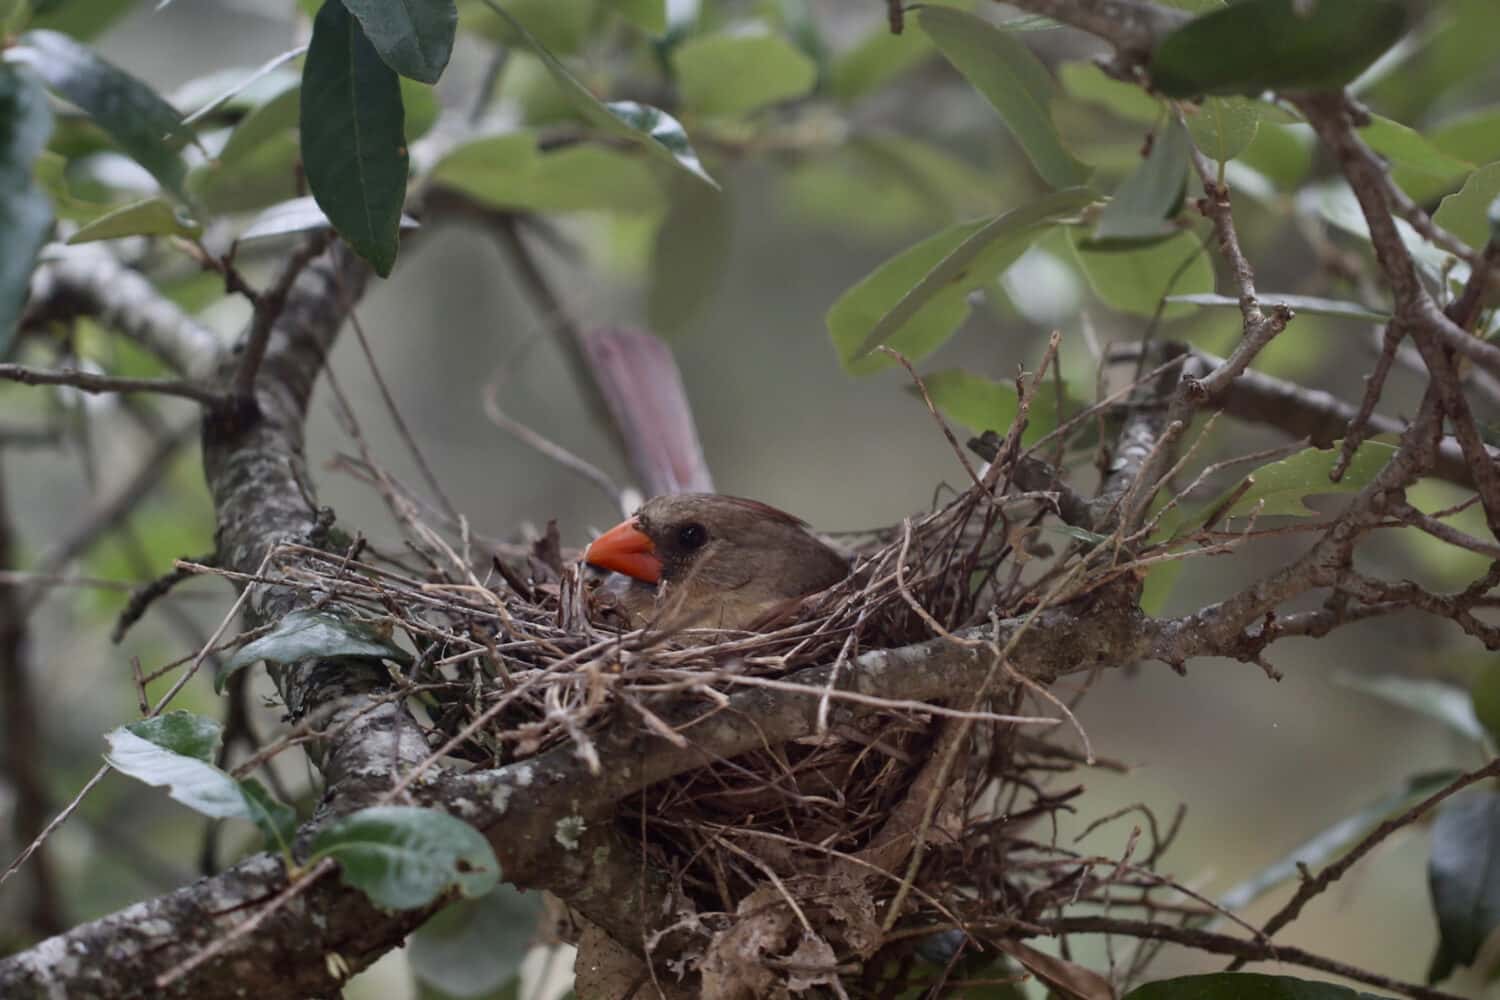 Isolated close up of Female Cardinal nesting in Texas Live Oak tree, eye level, select focus, Cardinalidae.